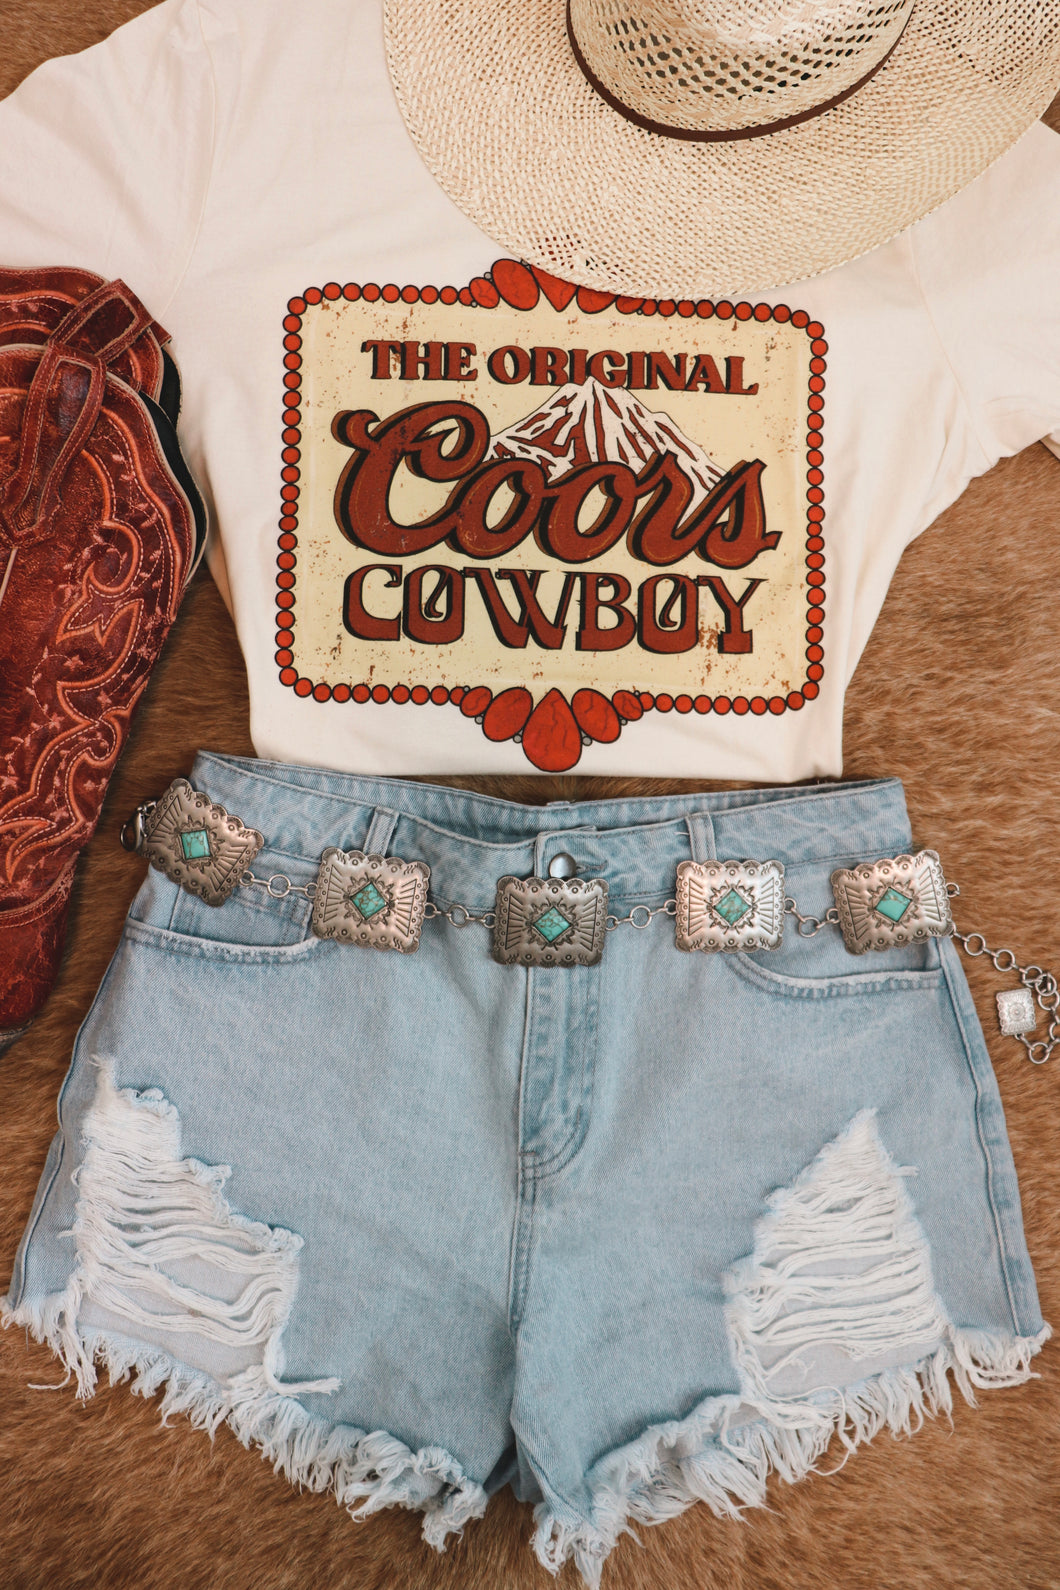 The OG Coors Cowboy T-Shirt